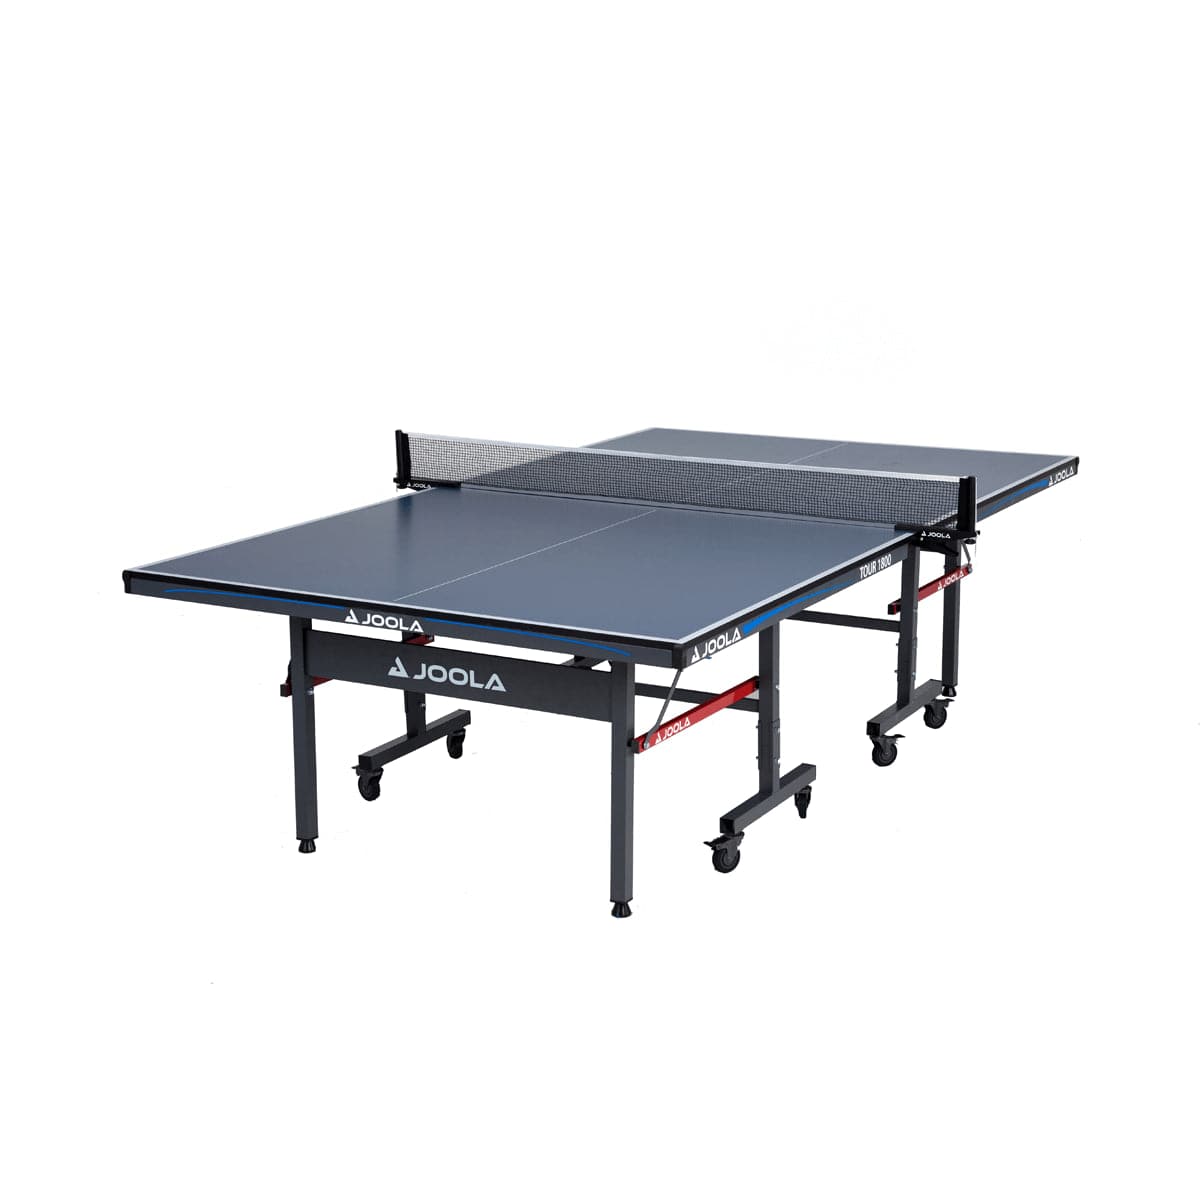 JOOLA TOUR 1800 Table Tennis Table (18mm) - Atomic Game Store